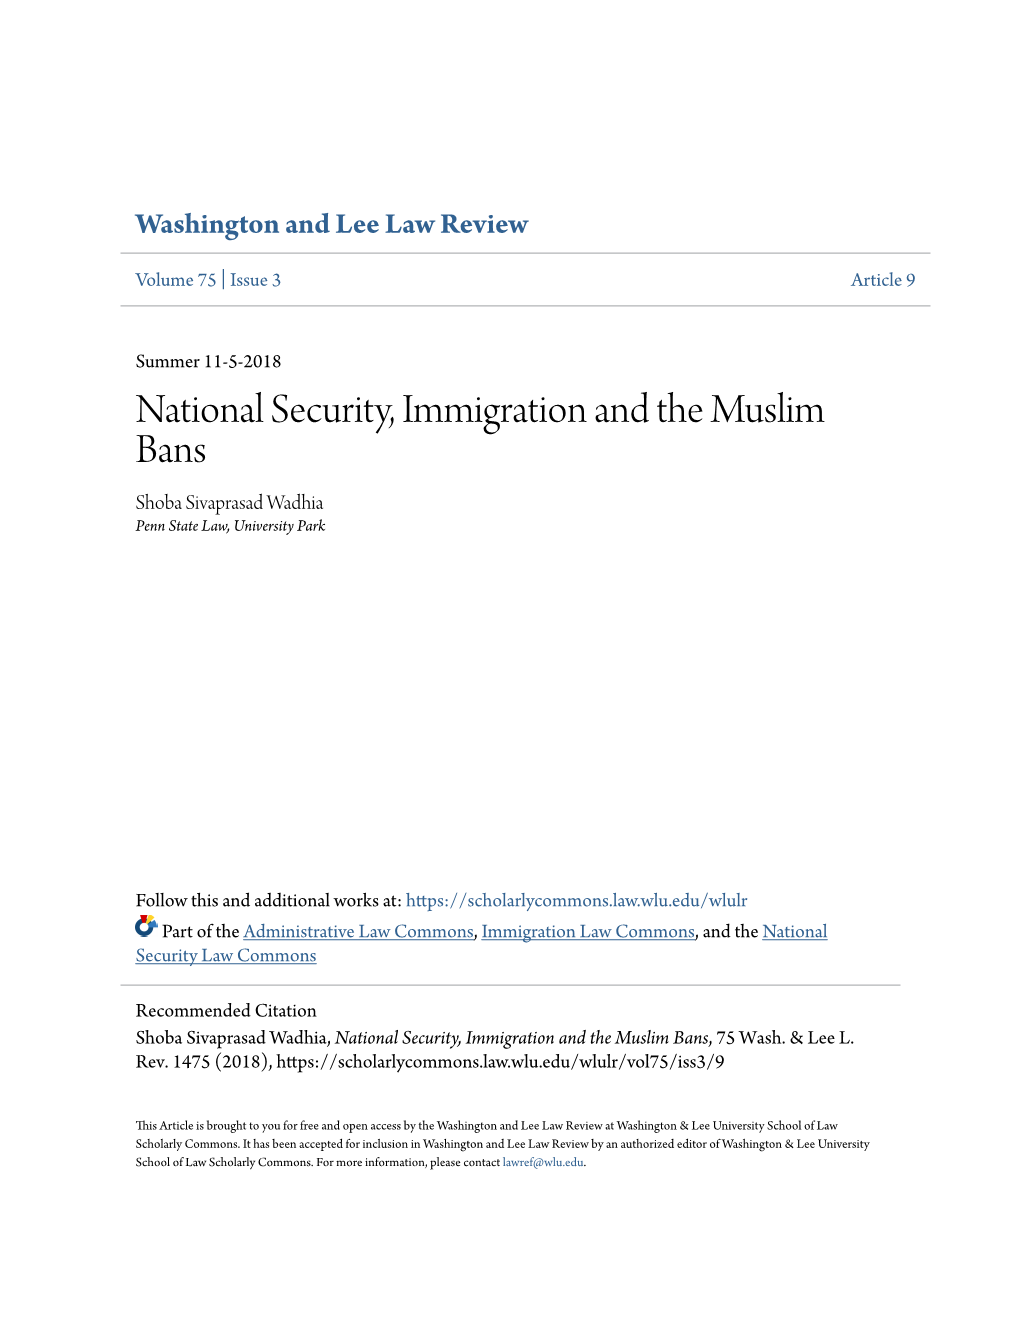 National Security, Immigration and the Muslim Bans Shoba Sivaprasad Wadhia Penn State Law, University Park